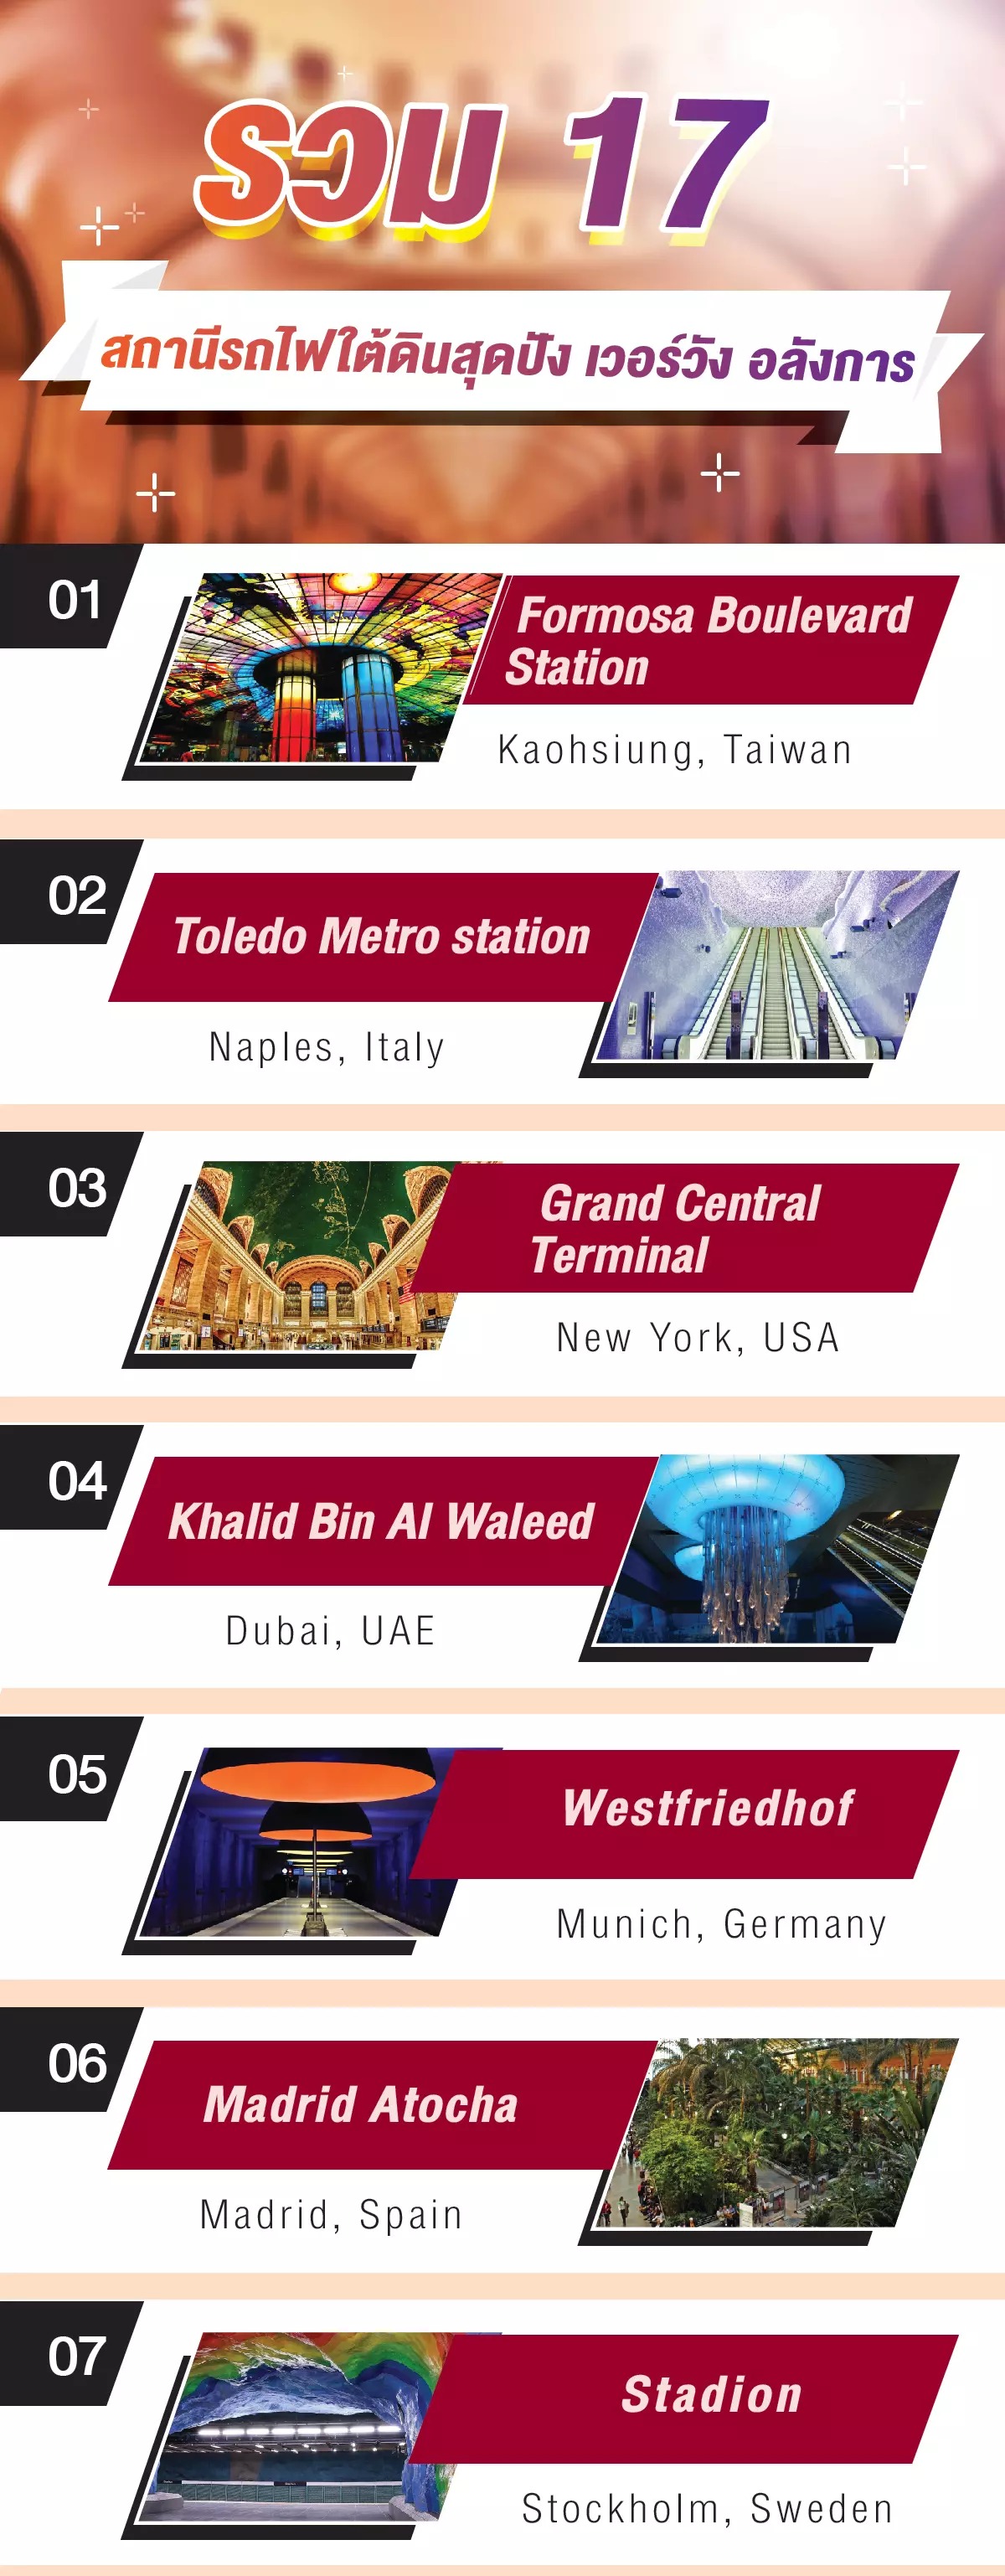 info_metro stations_draf3-02